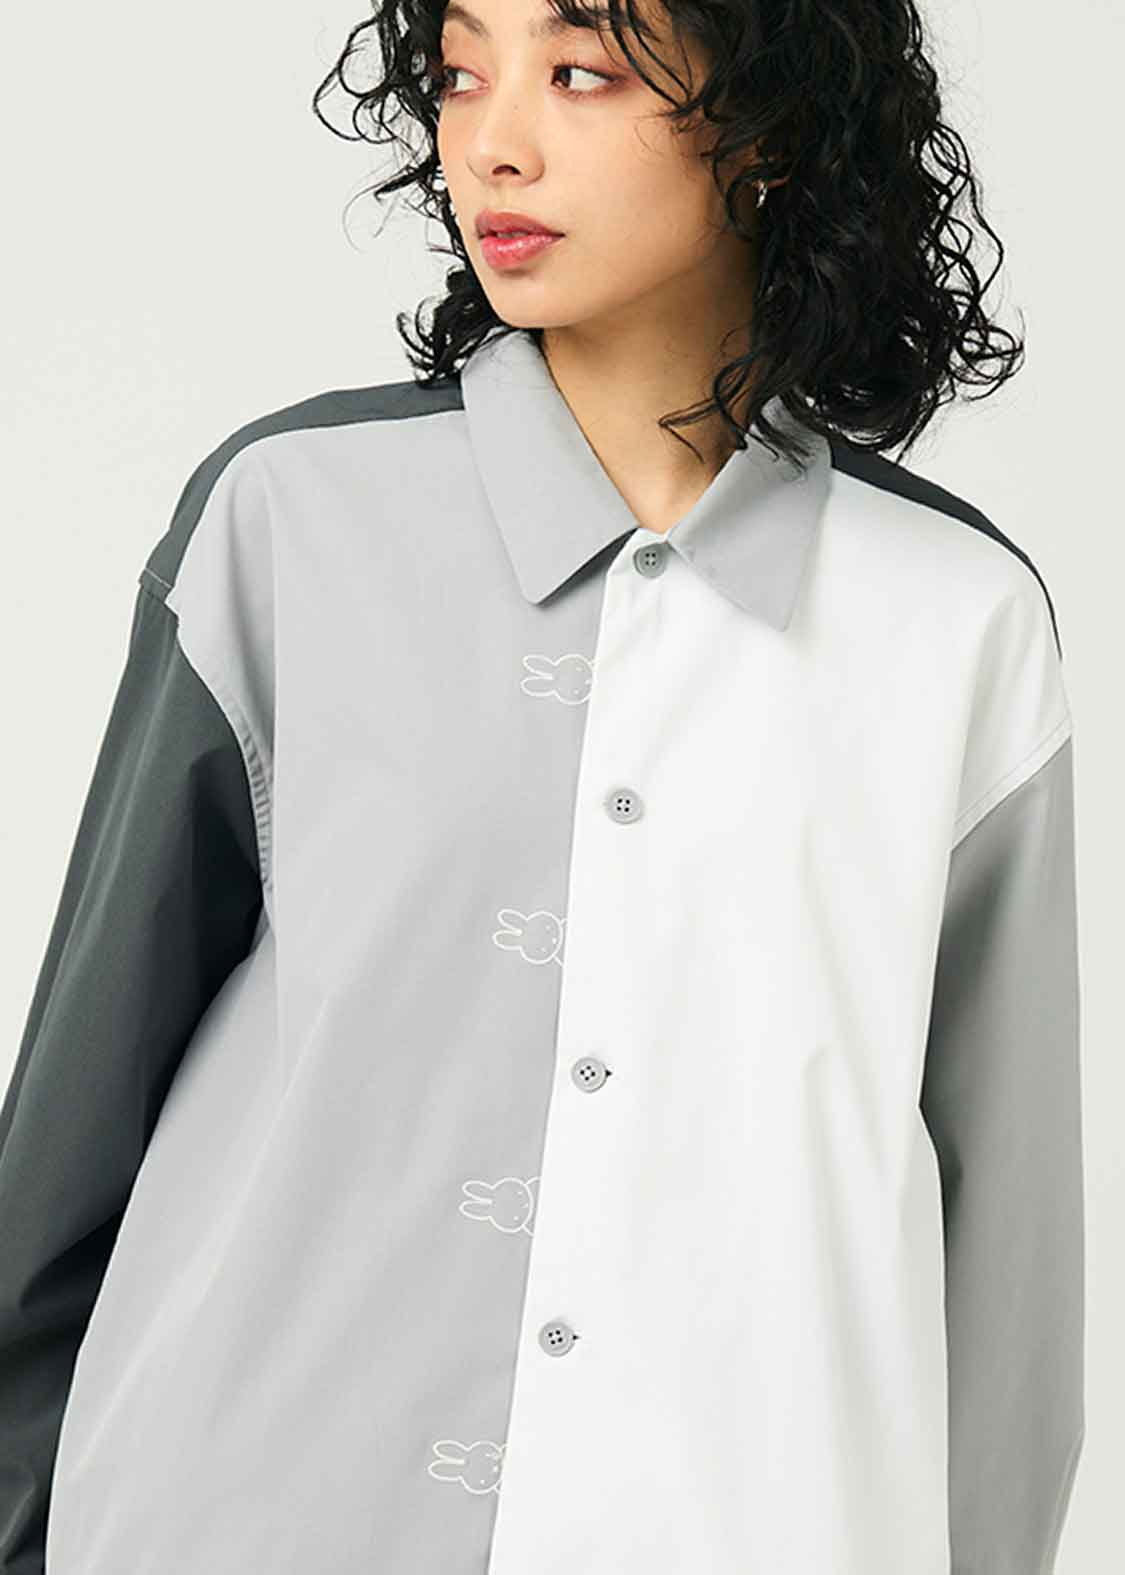 miffy Long Sleeve Coach Shirt (miffy_miffy Variation)